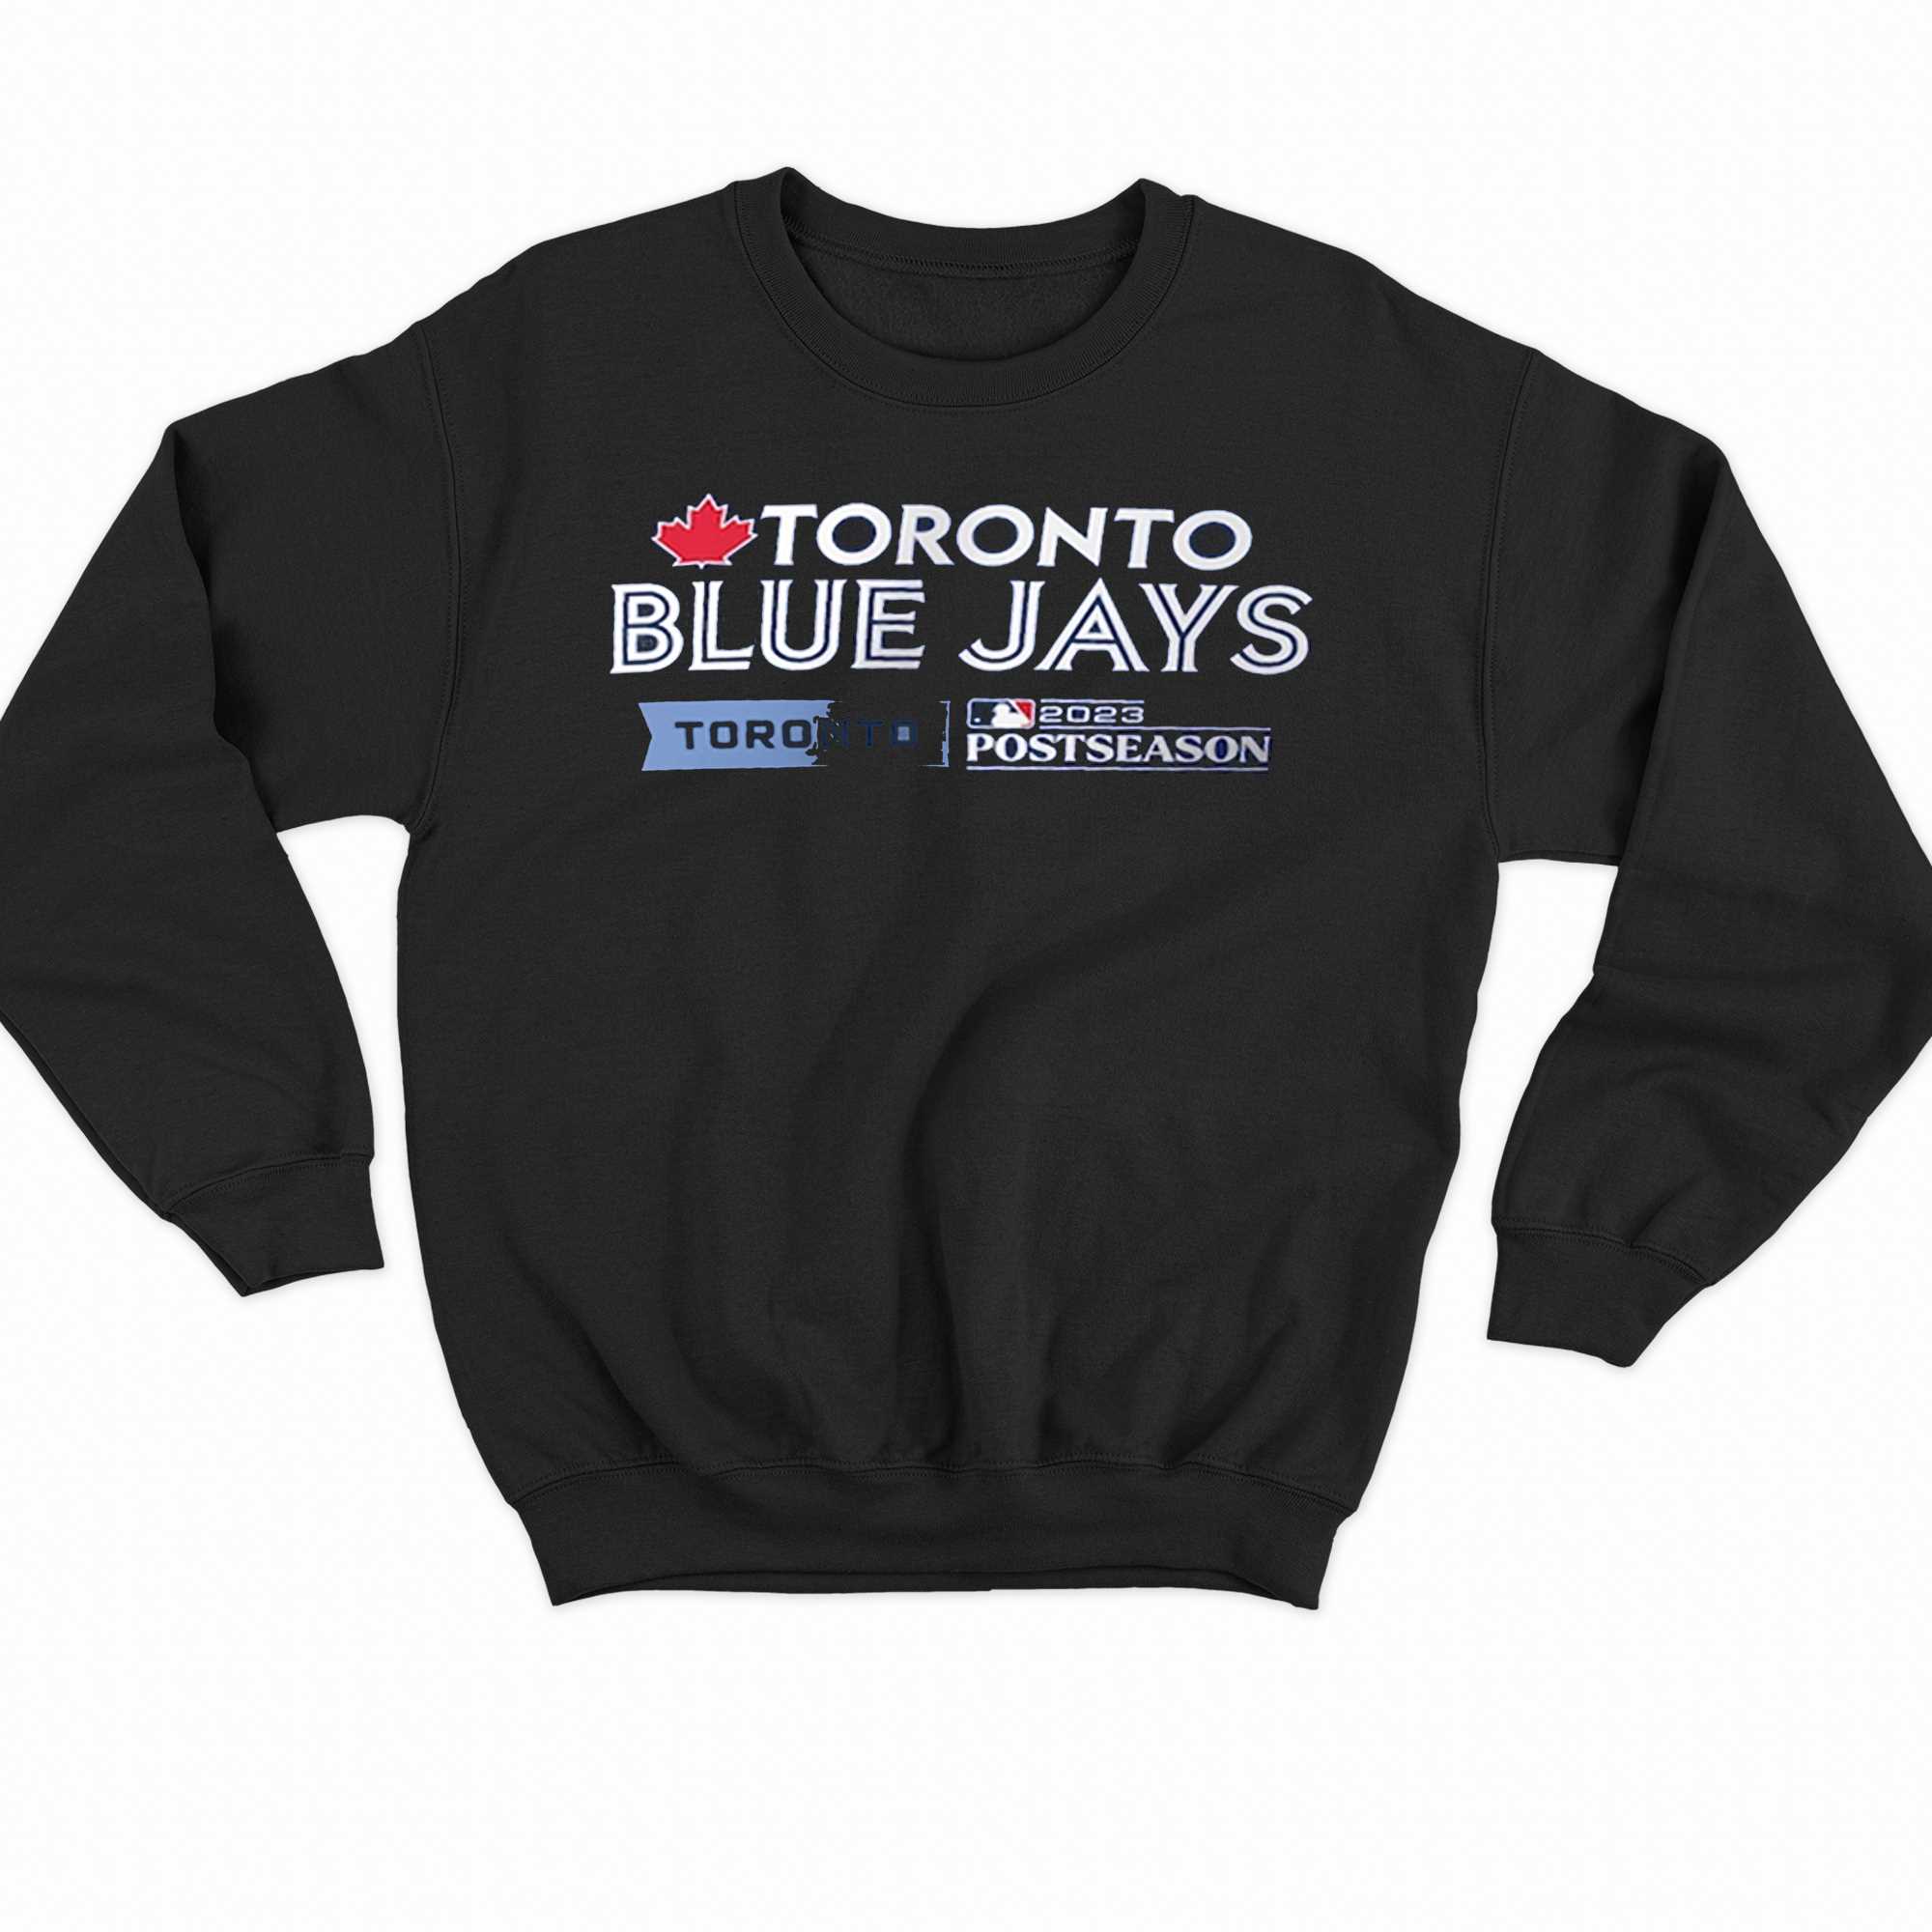 Men's Nike Royal Toronto Blue Jays Heavyweight Long Sleeve T-Shirt